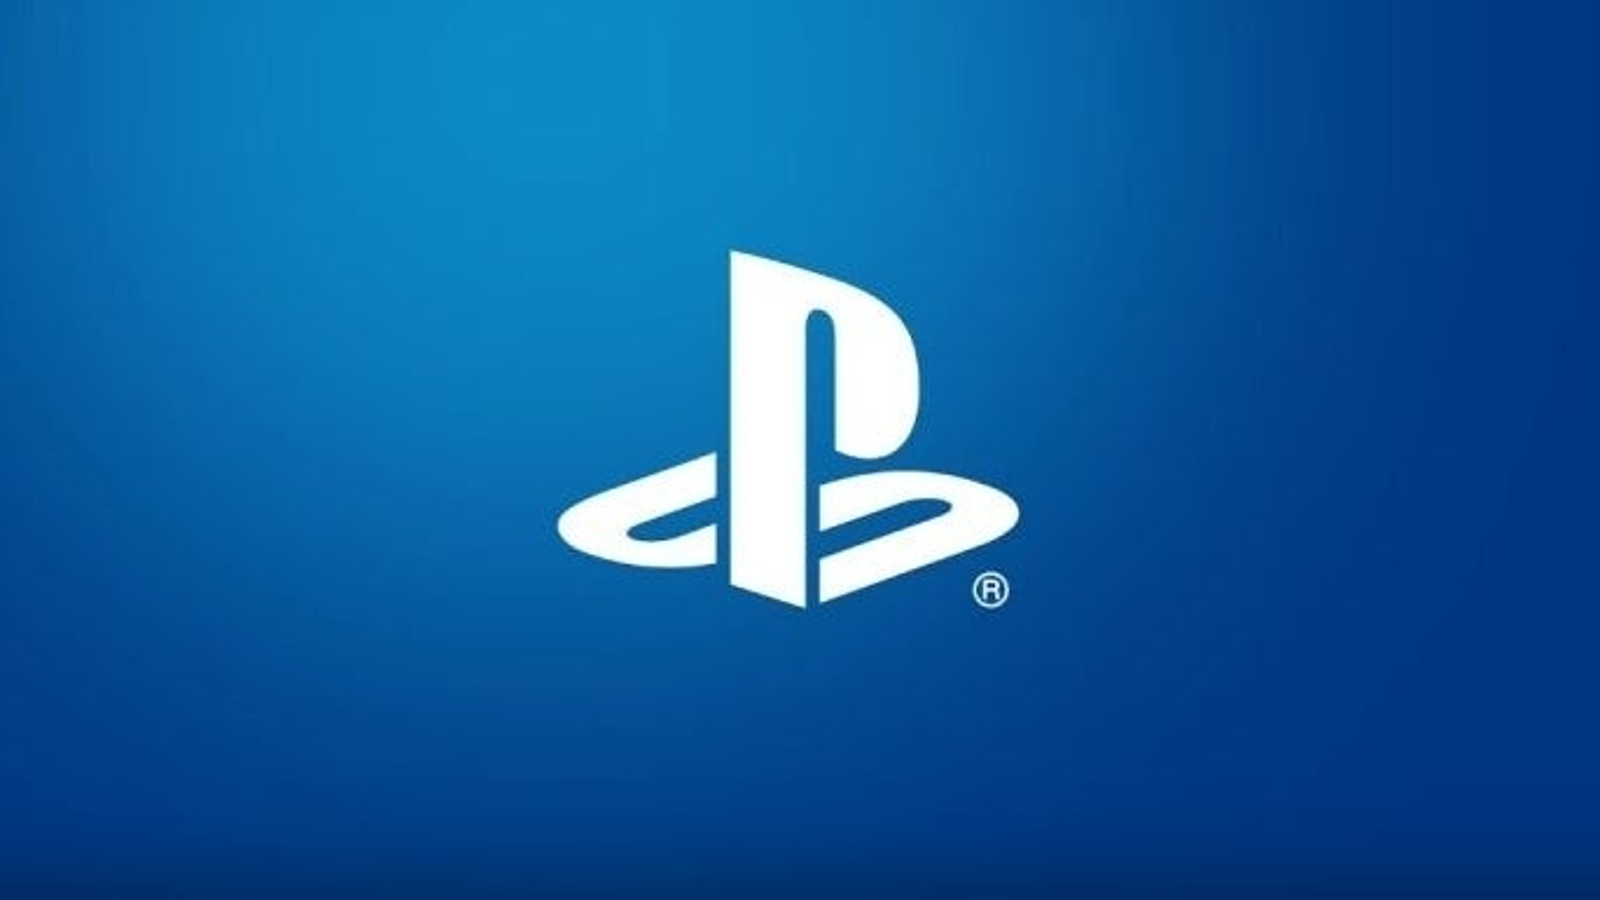 Microsoft Seemingly Reveals Sony PlayStation 5 Slim and Pro